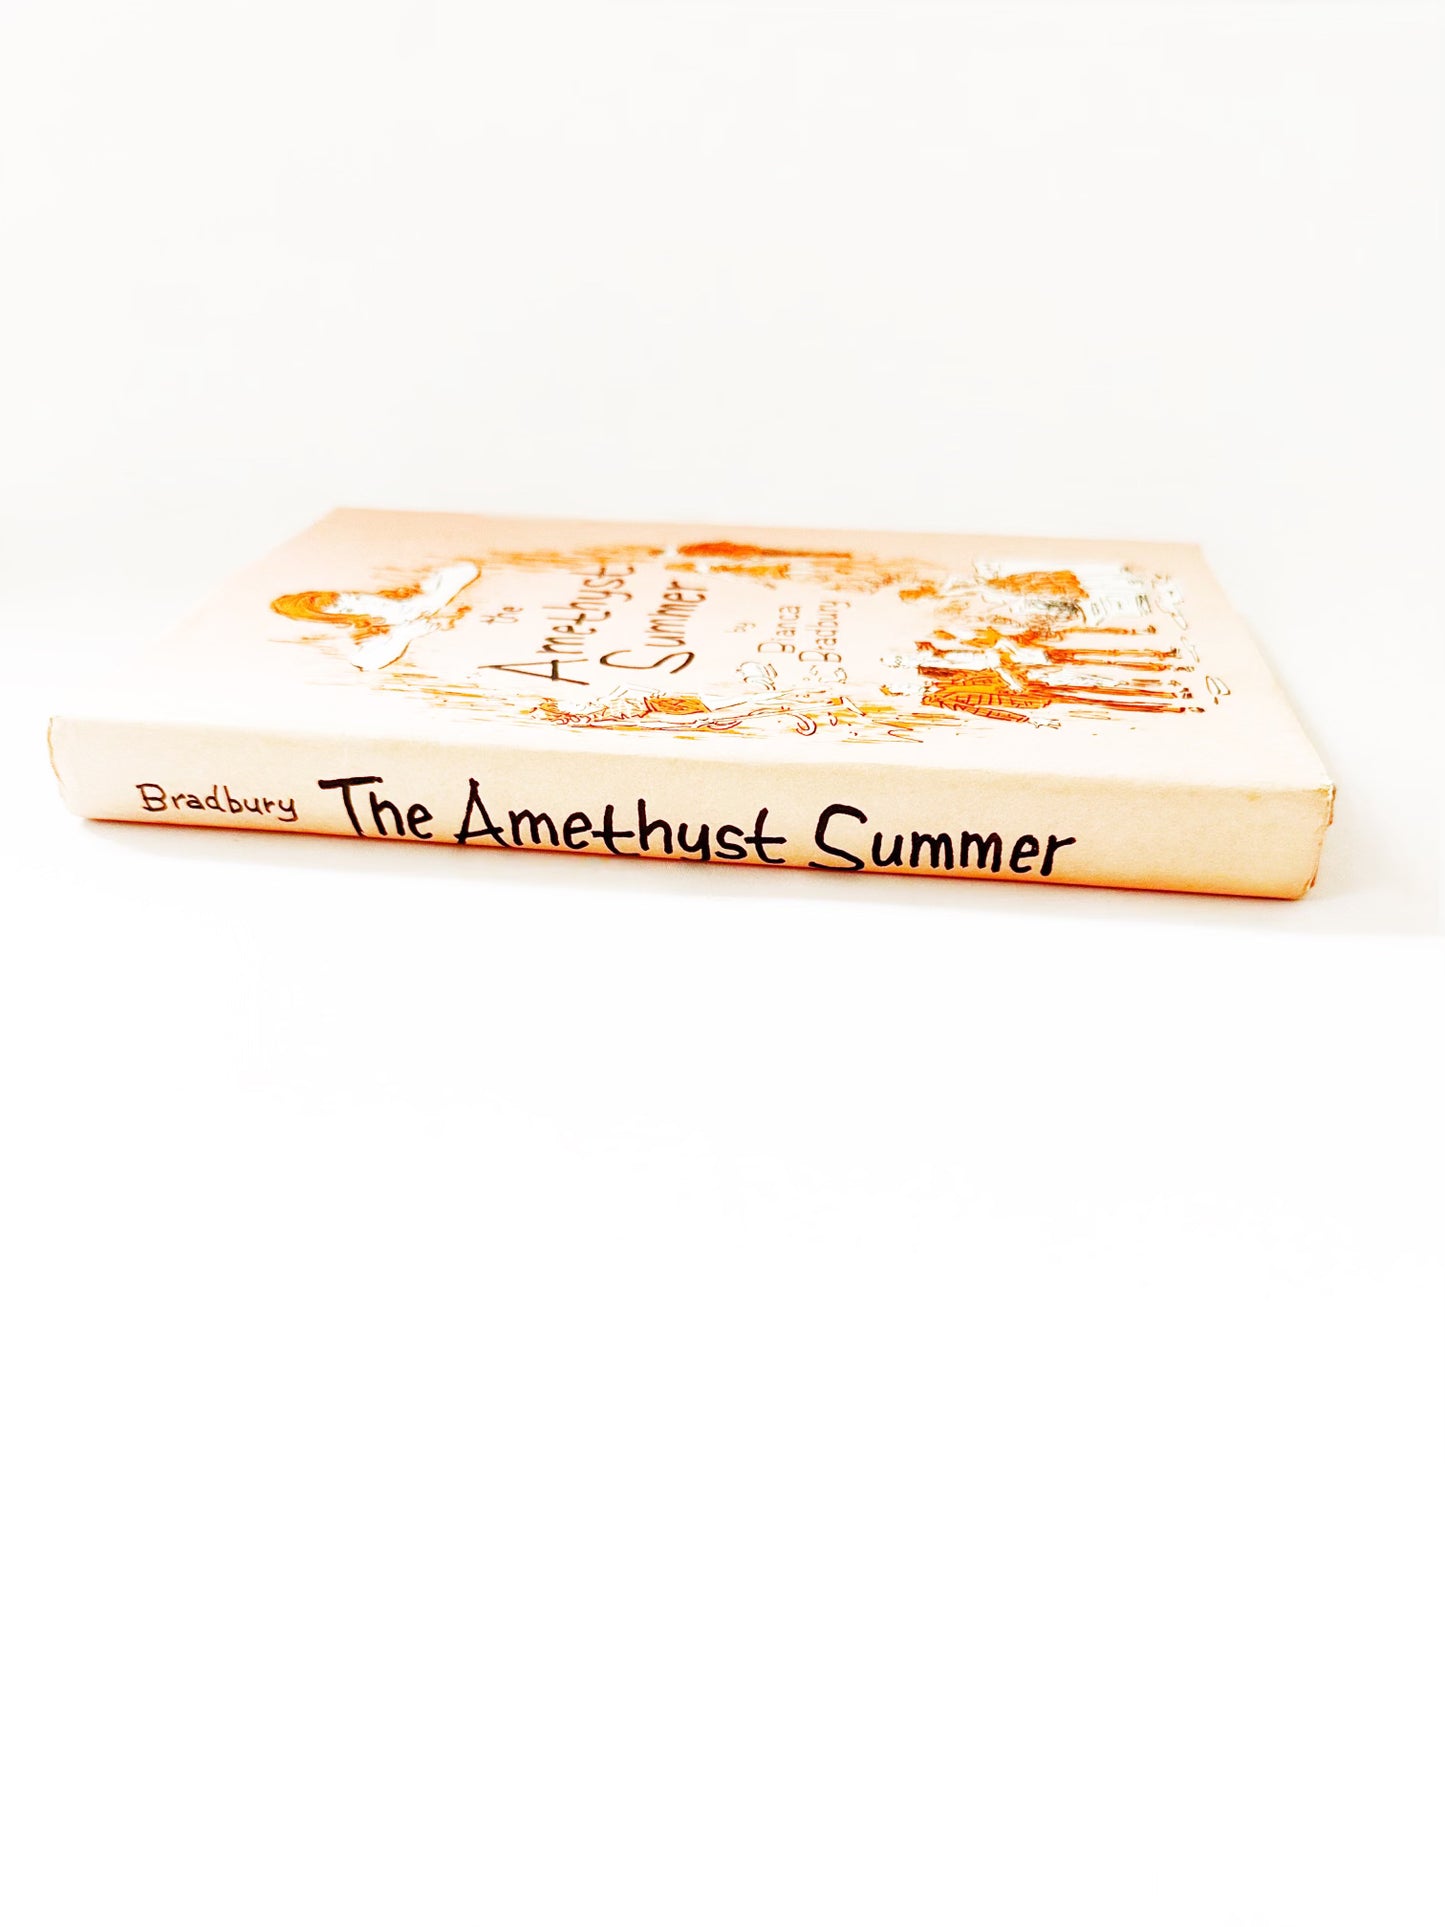 The Amethyst Summer Book